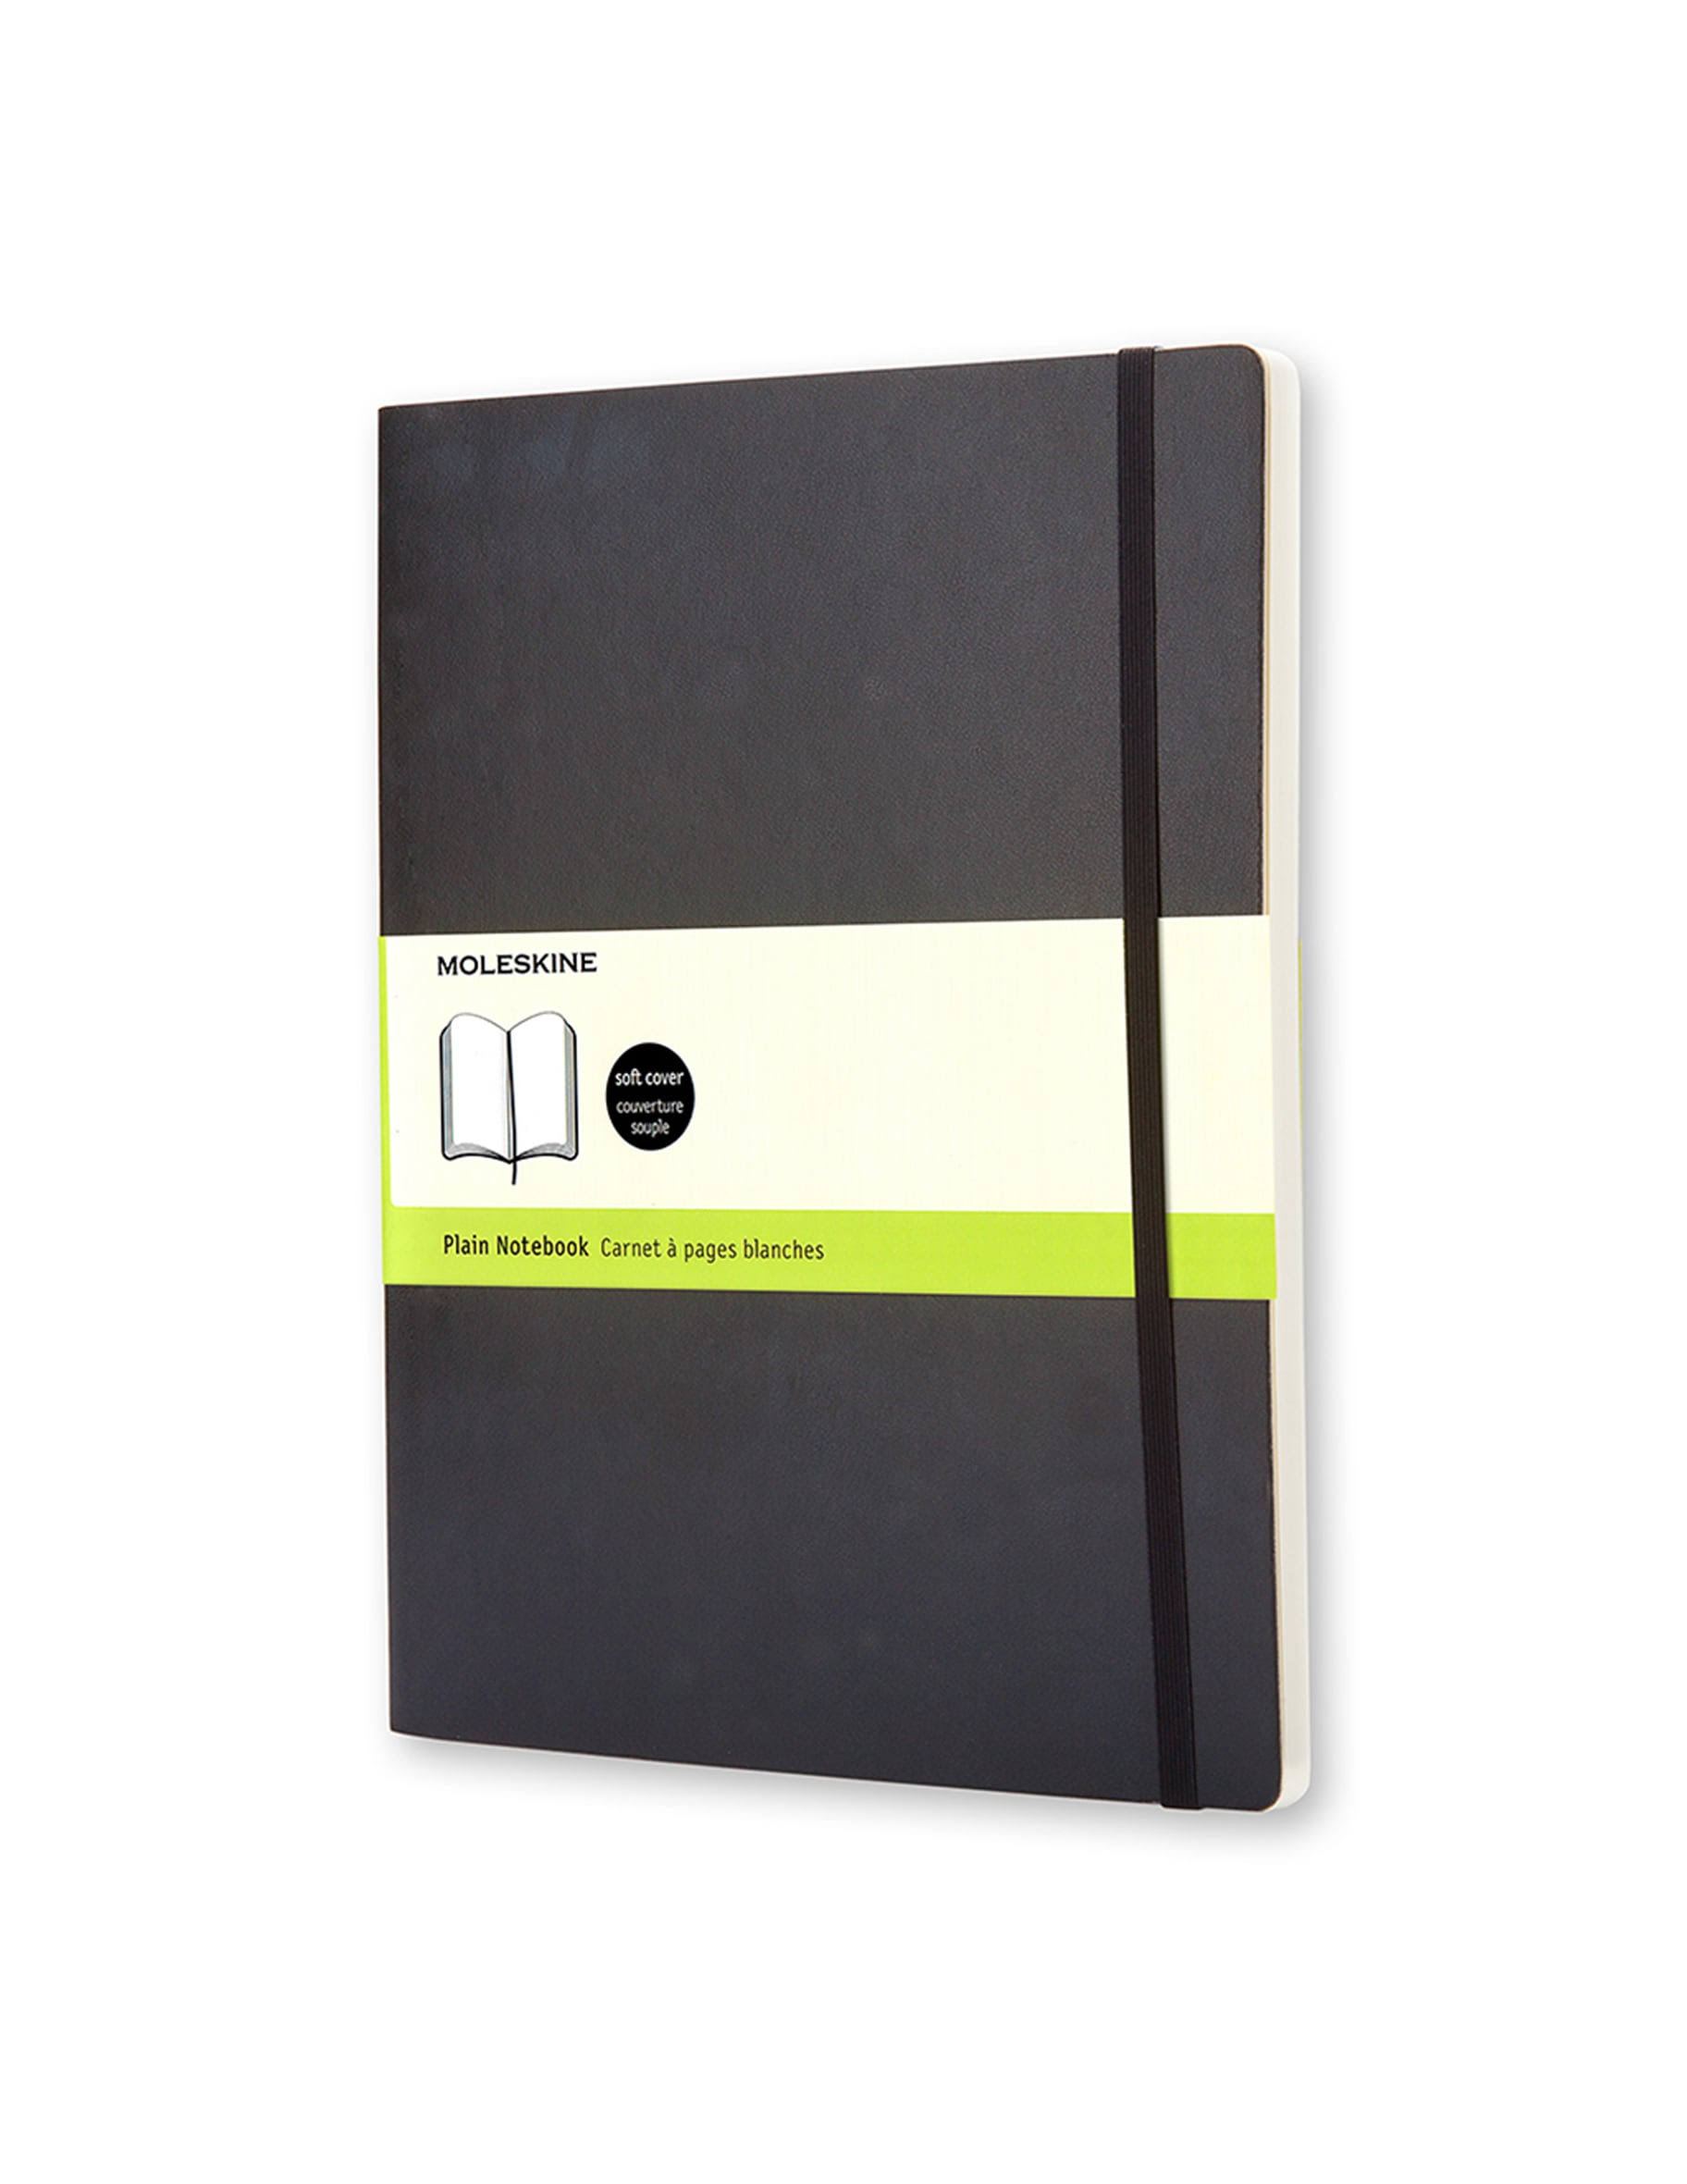 Moleskine Notebook - Black, Soft Cover, Plain